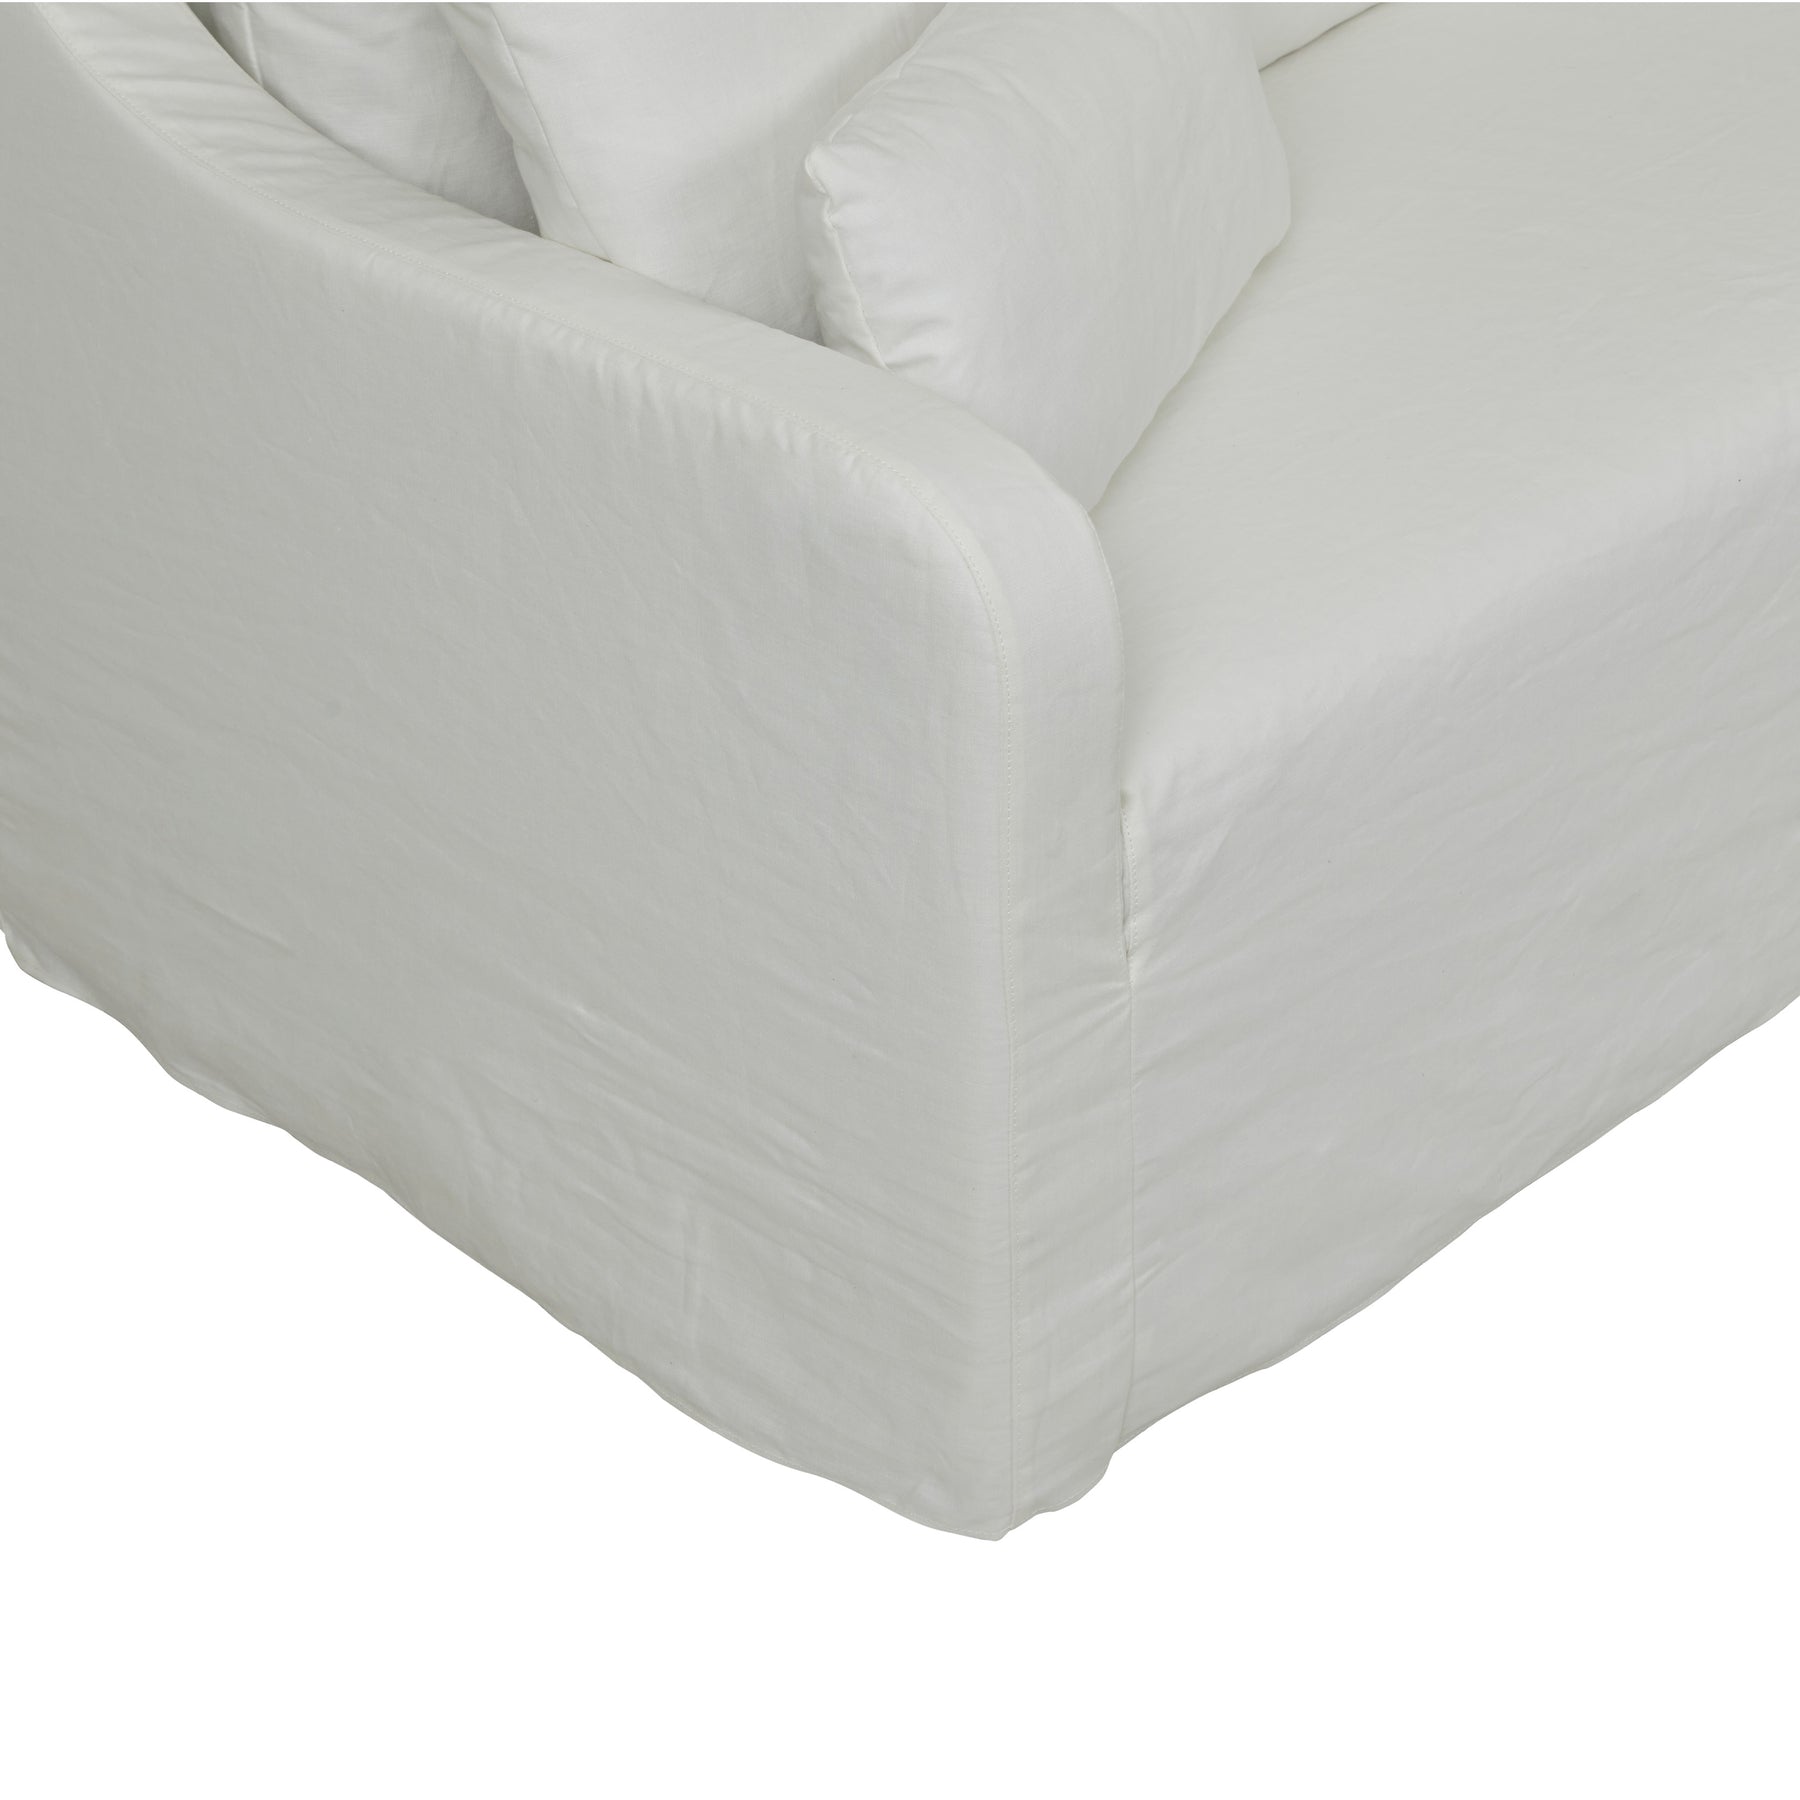 Sidney Slip 3S Sofa- Milk Linen